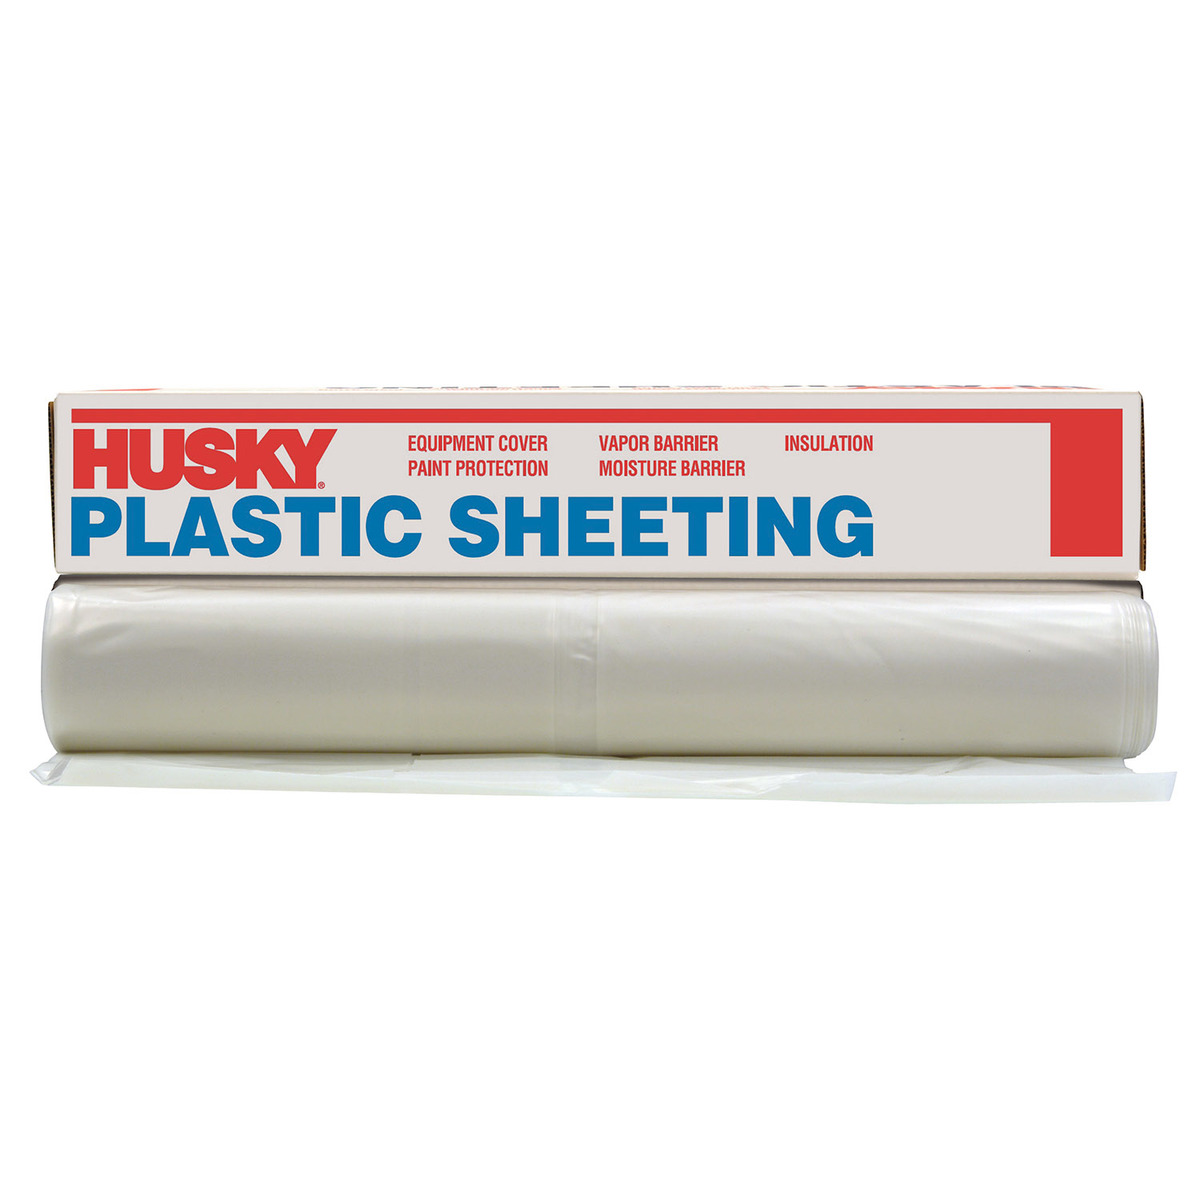 Husky Clear Plastic Sheeting